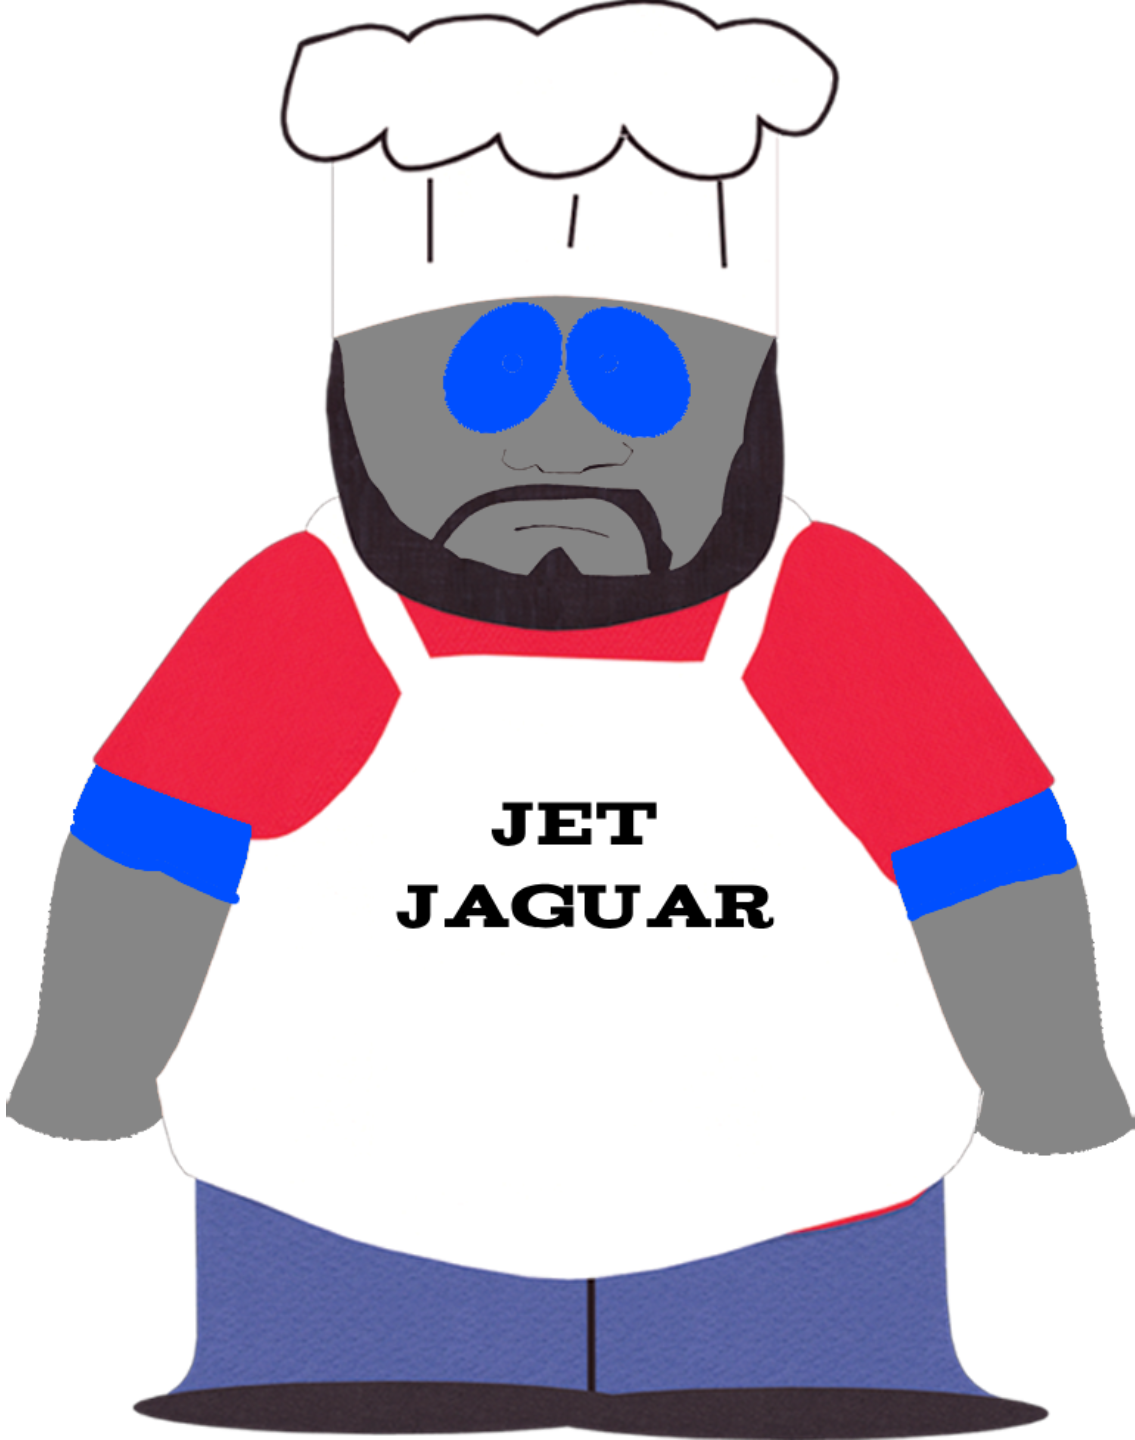 Jerome "Chef" McElroy as Jet Jaguar Blank Meme Template